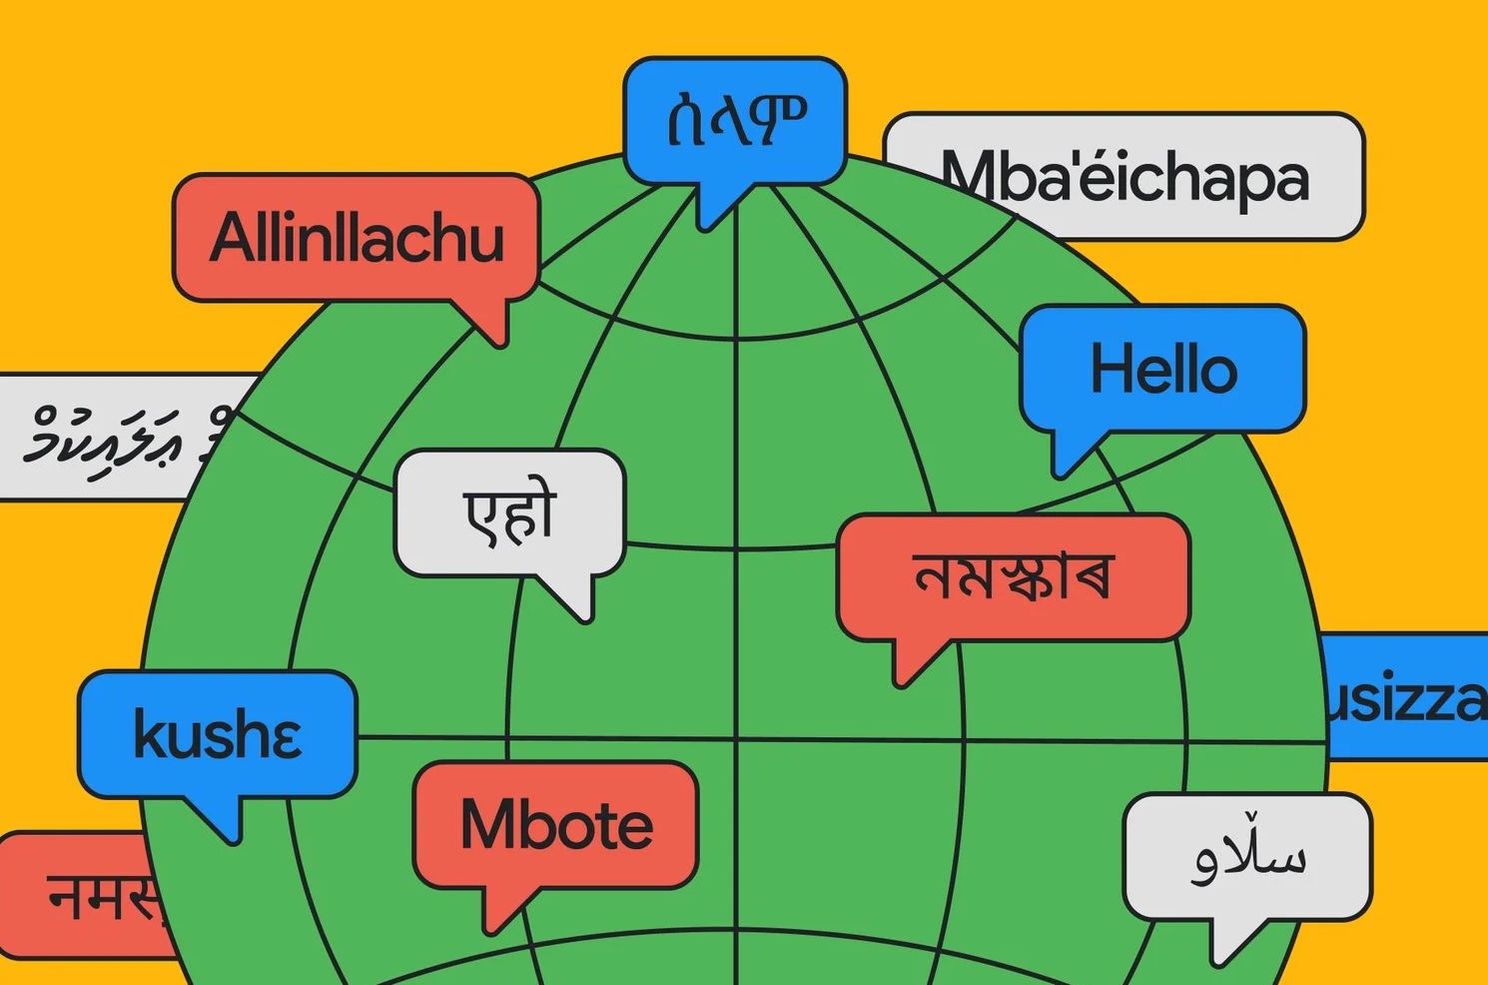 Google makes a silly translation mistake in global I/O presentation